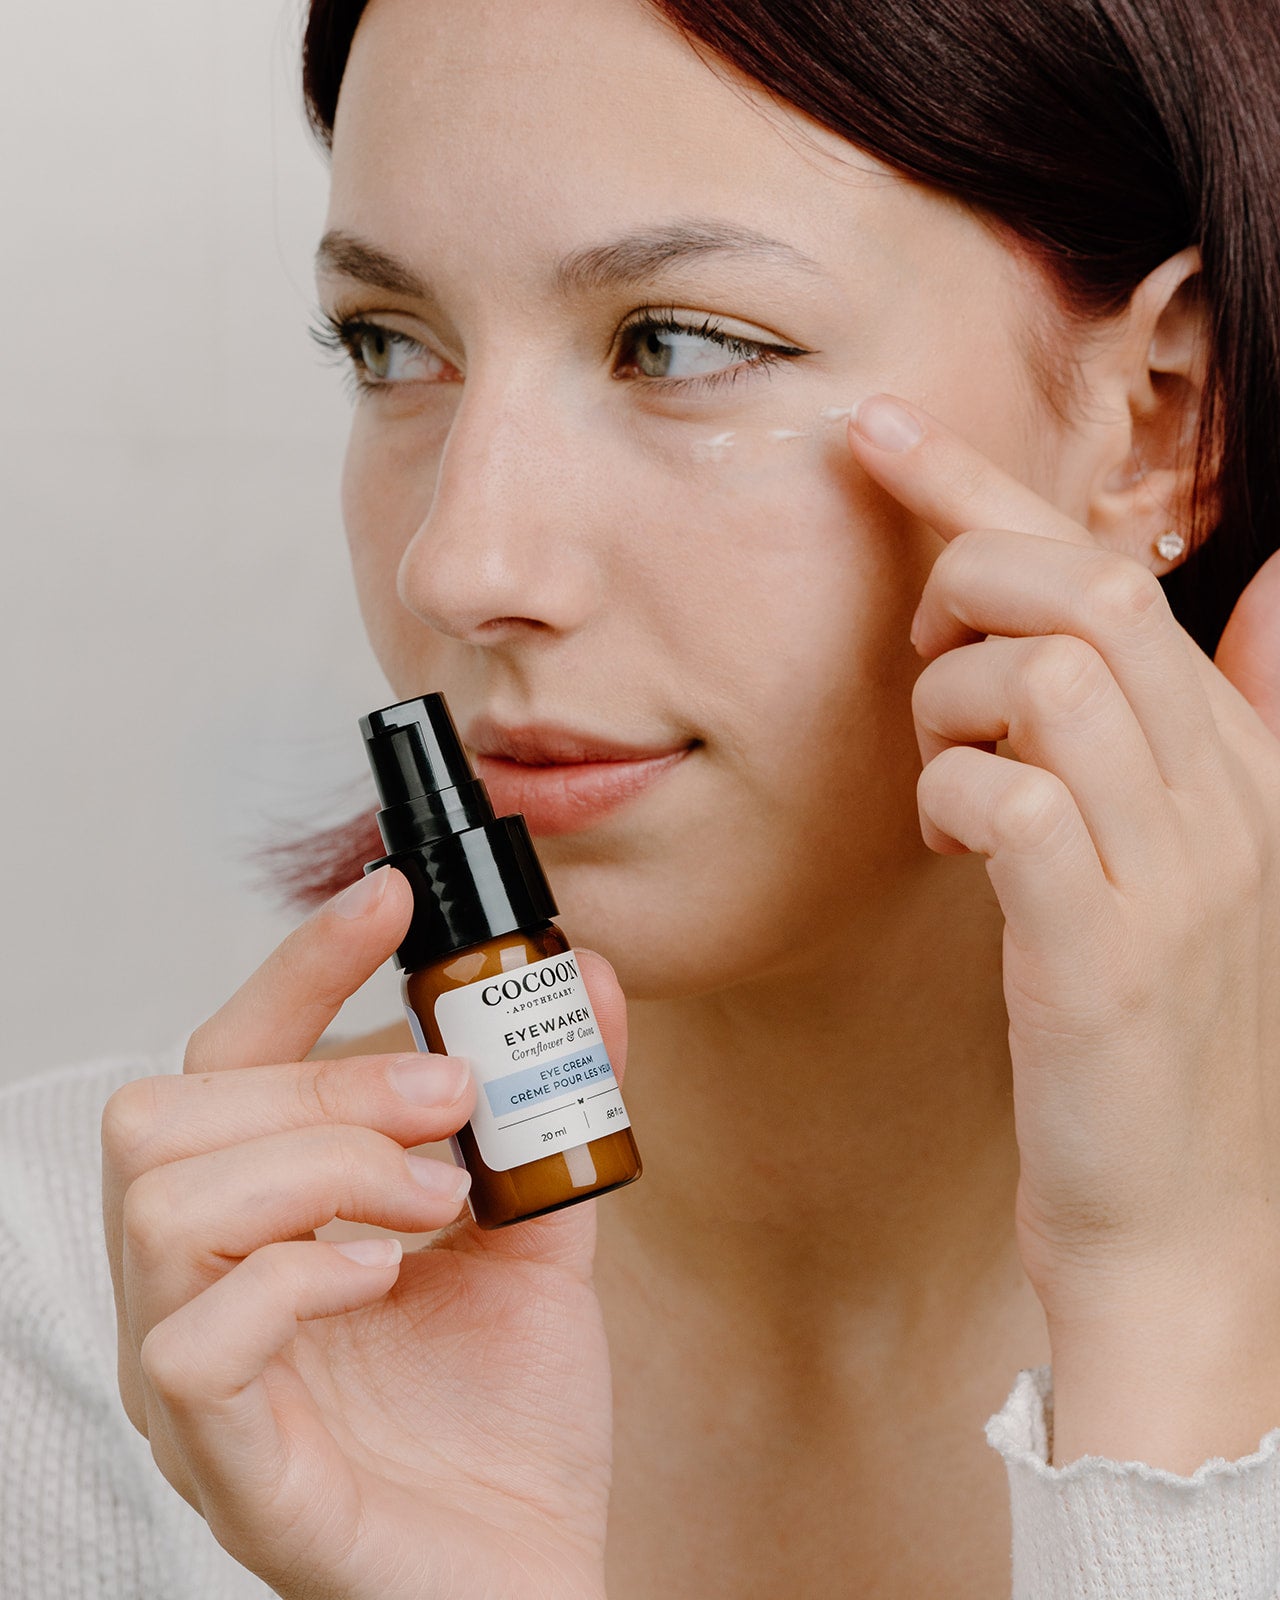 Eyewaken natural eye cream firming great for dark circles and puffiness  